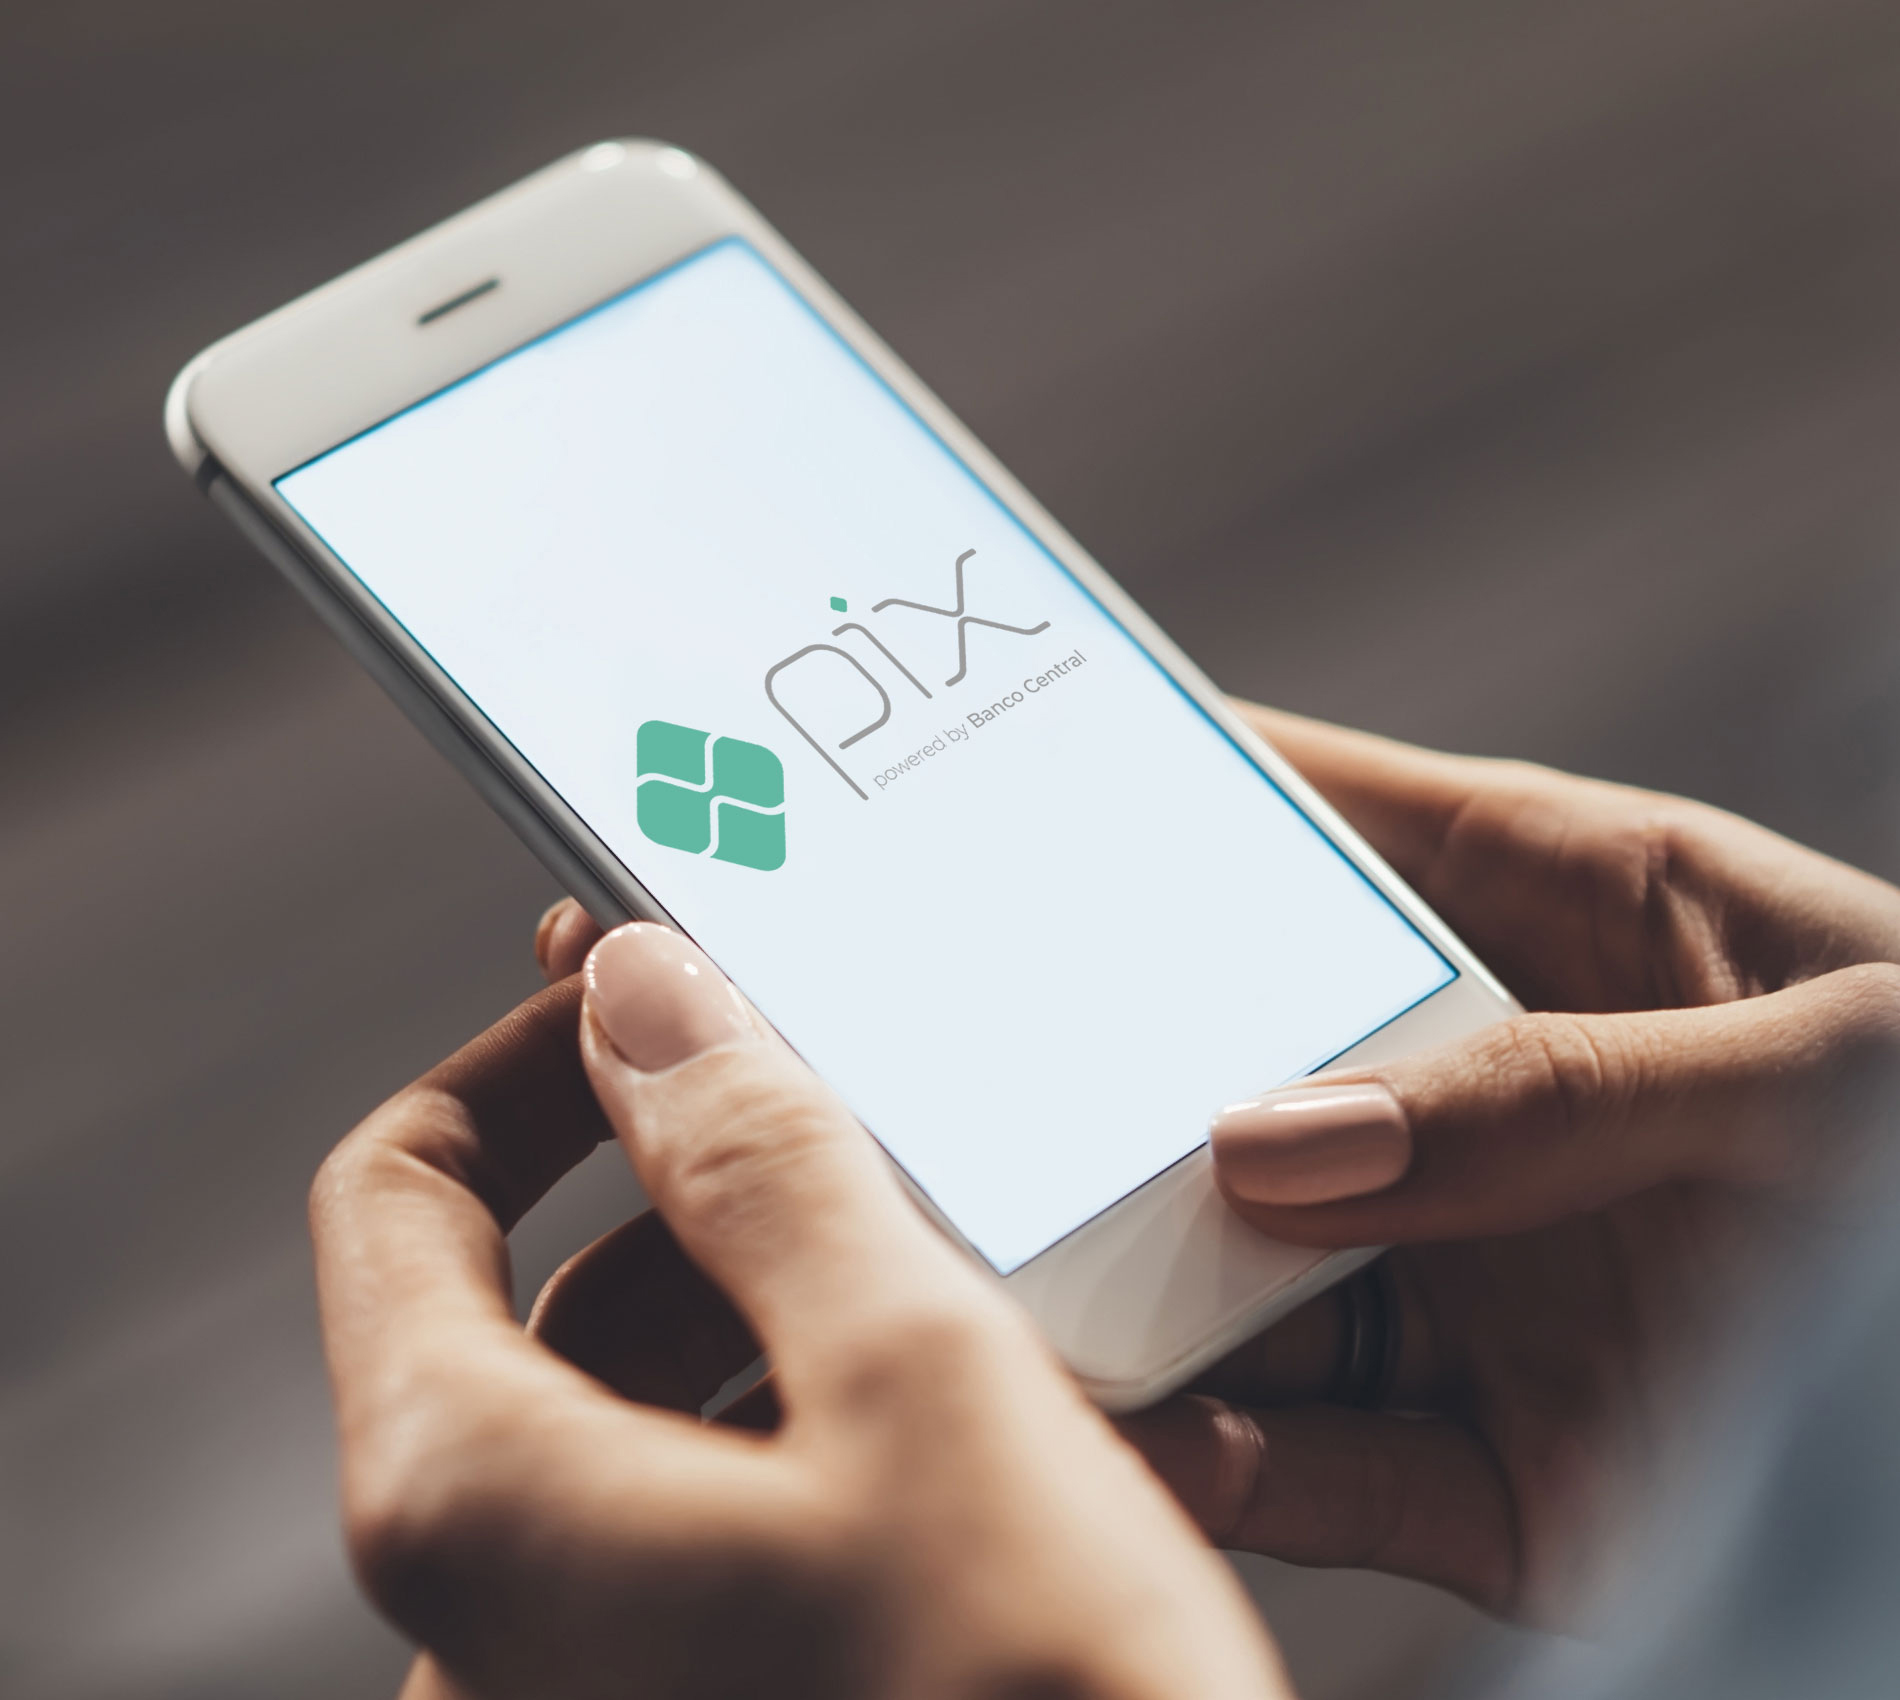 Pix vai estimular uso de pagamentos mobile